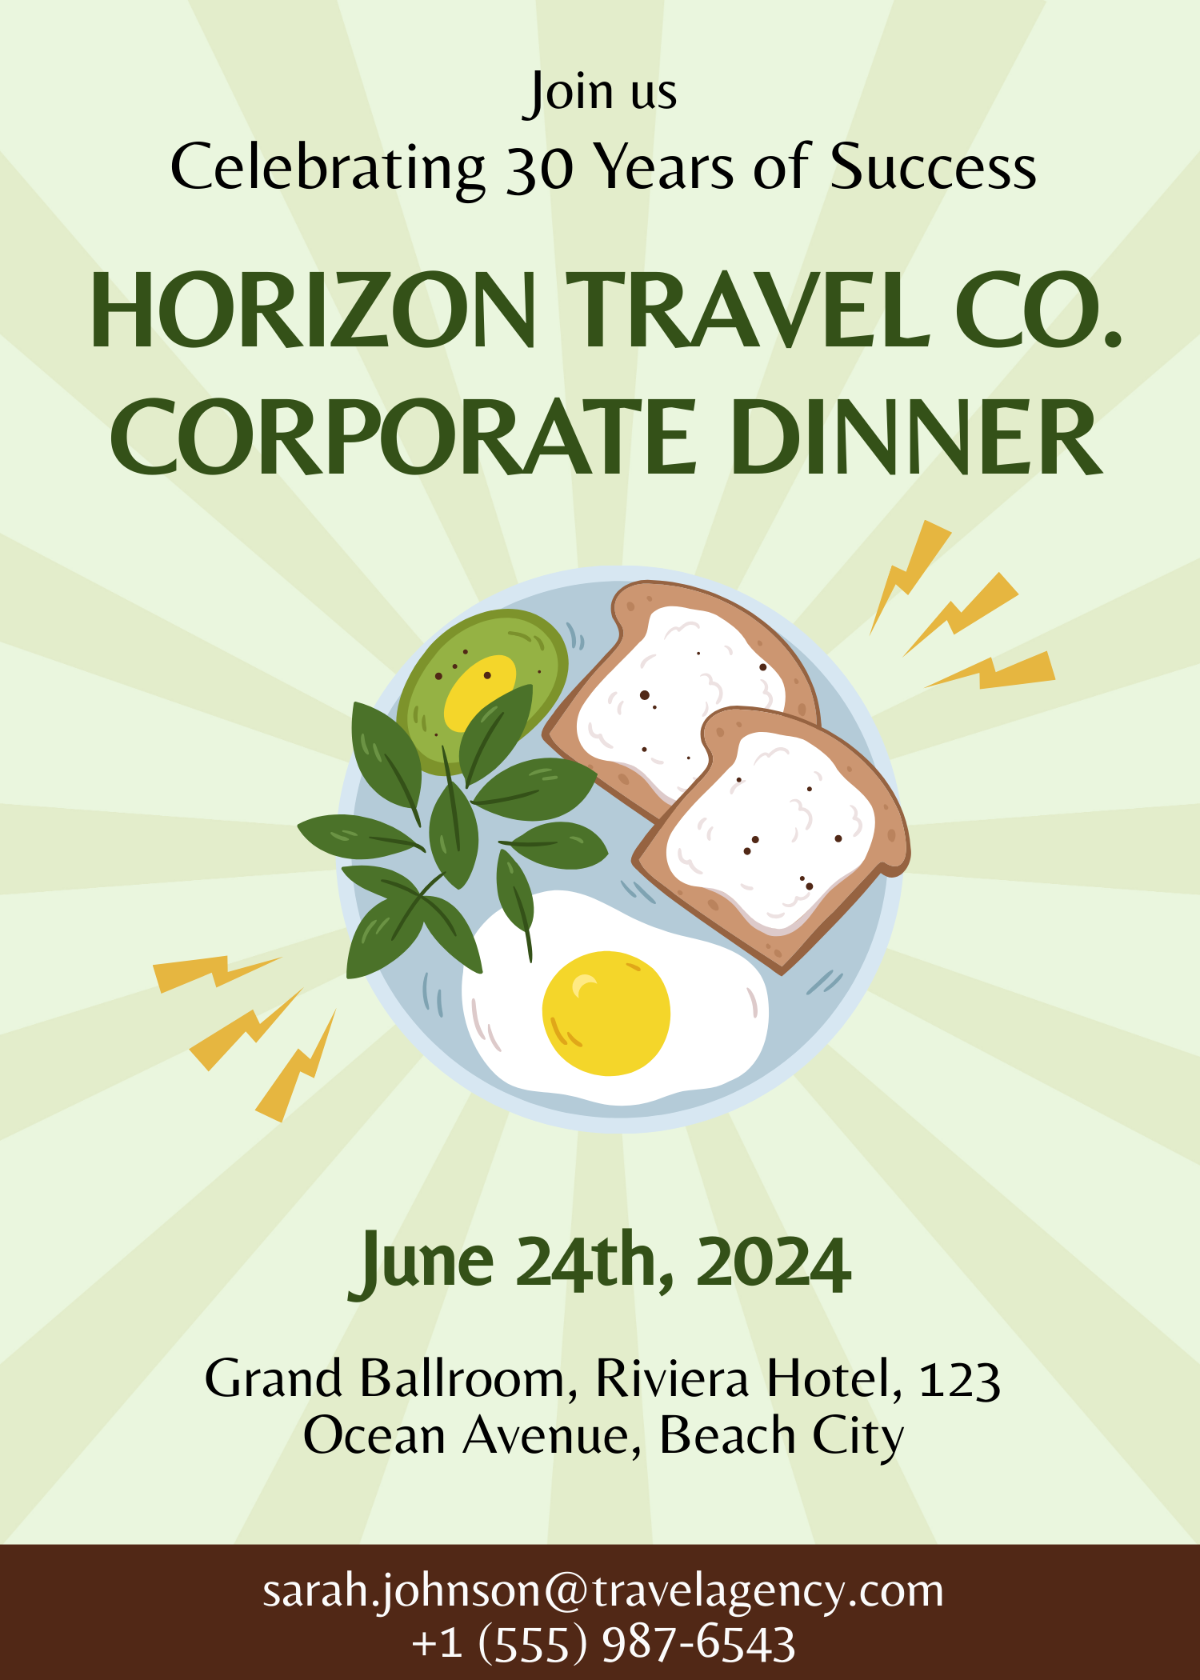 Travel Agency Corporate Dinner Invitation